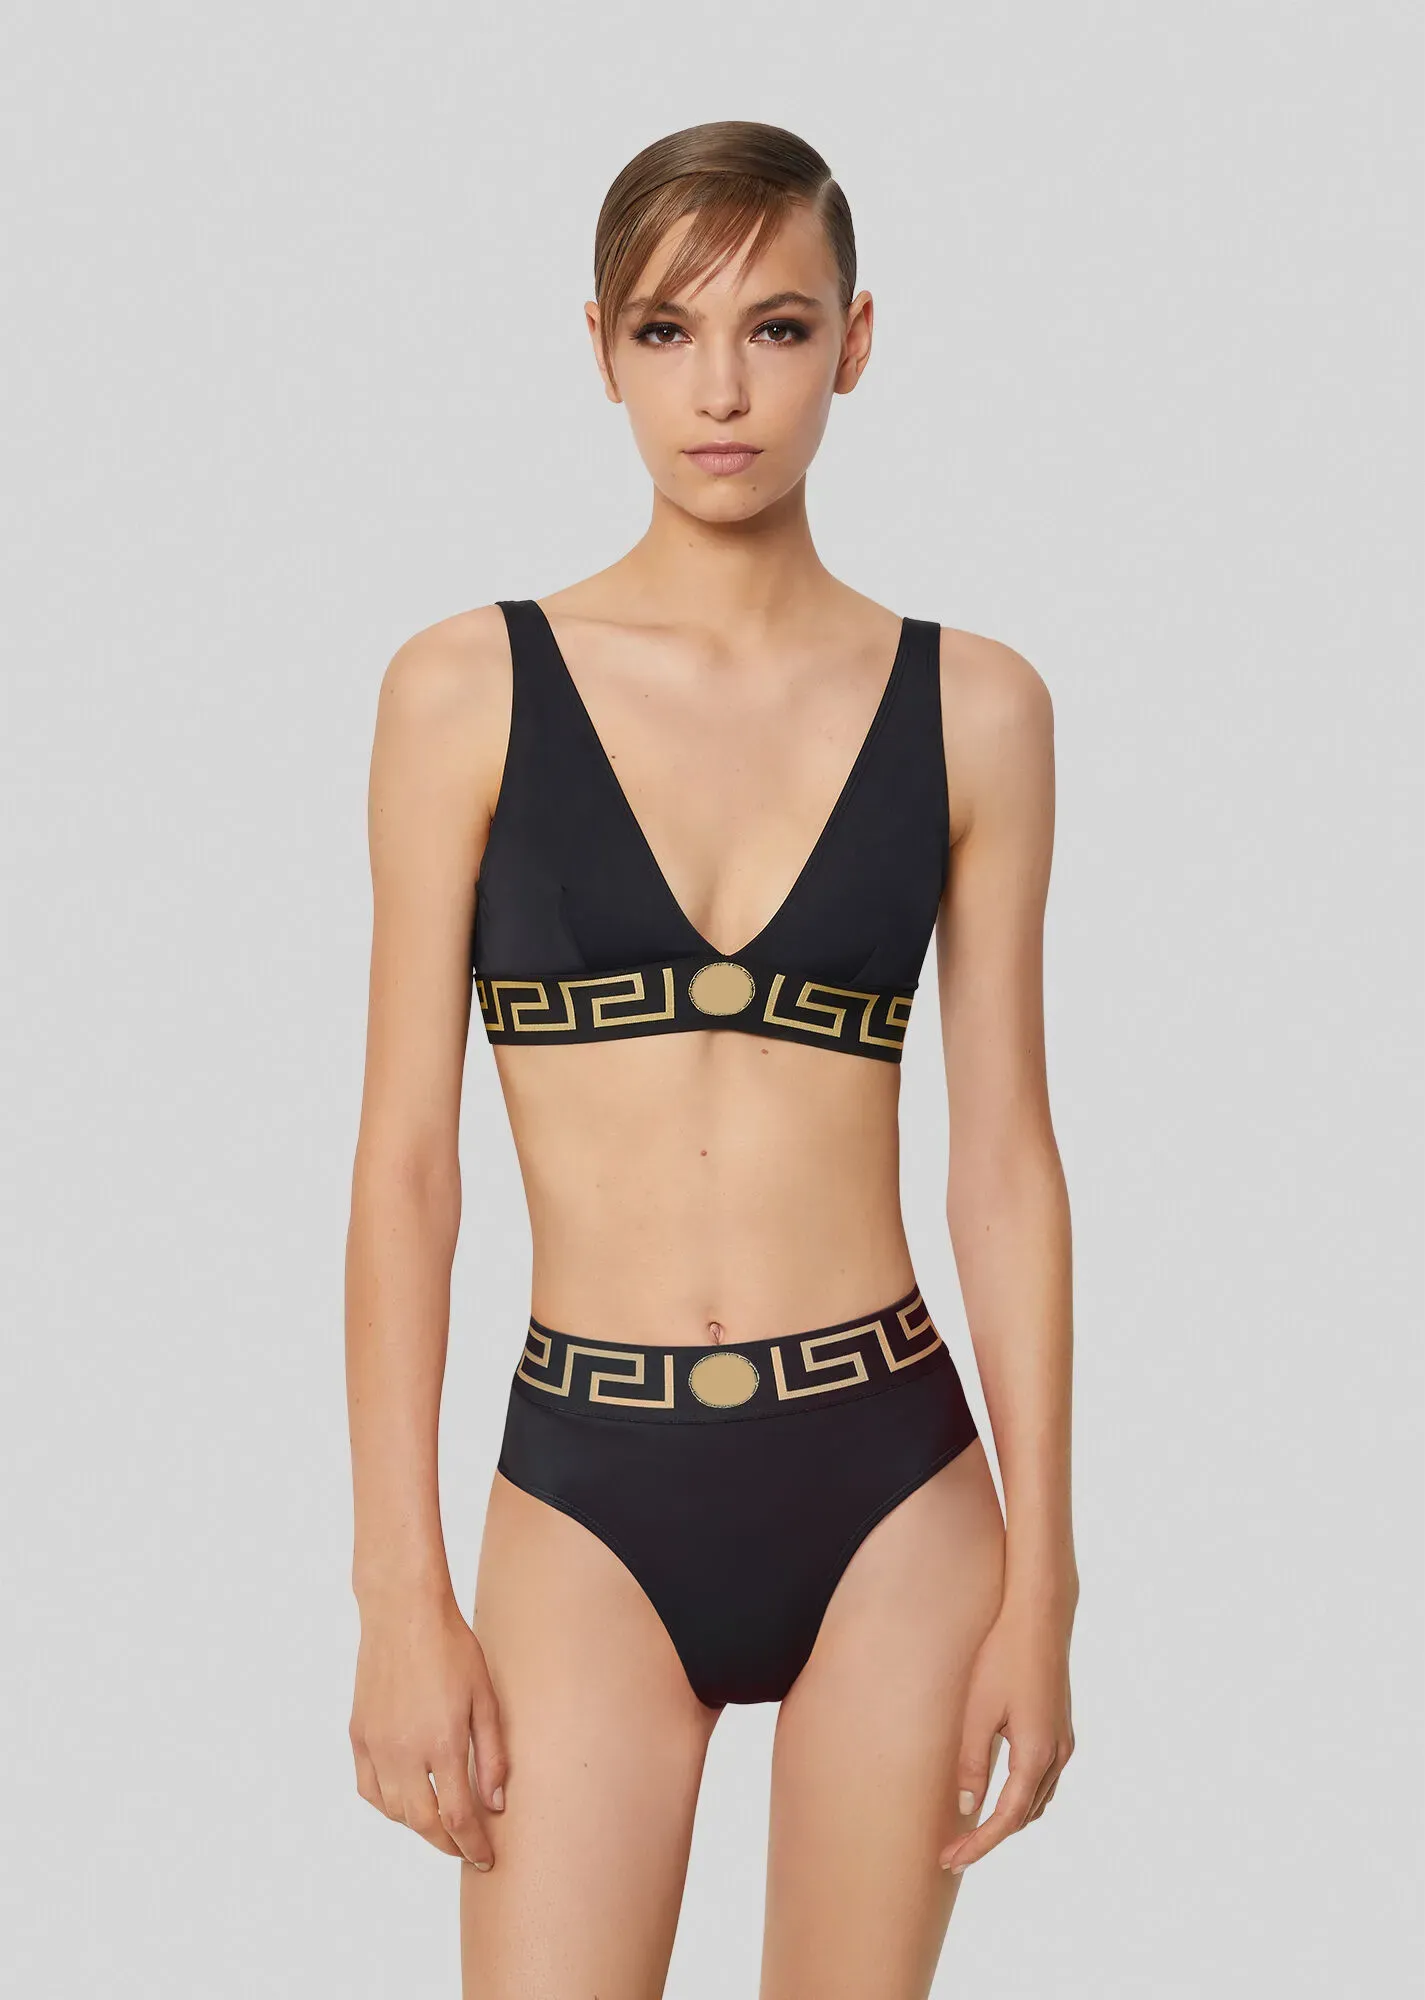 Fashion Bikini Designers G Chain black Women Swimsuits bikini set Multicolors Summer Time Beach Bathing suits Wind Swimwear S-XL